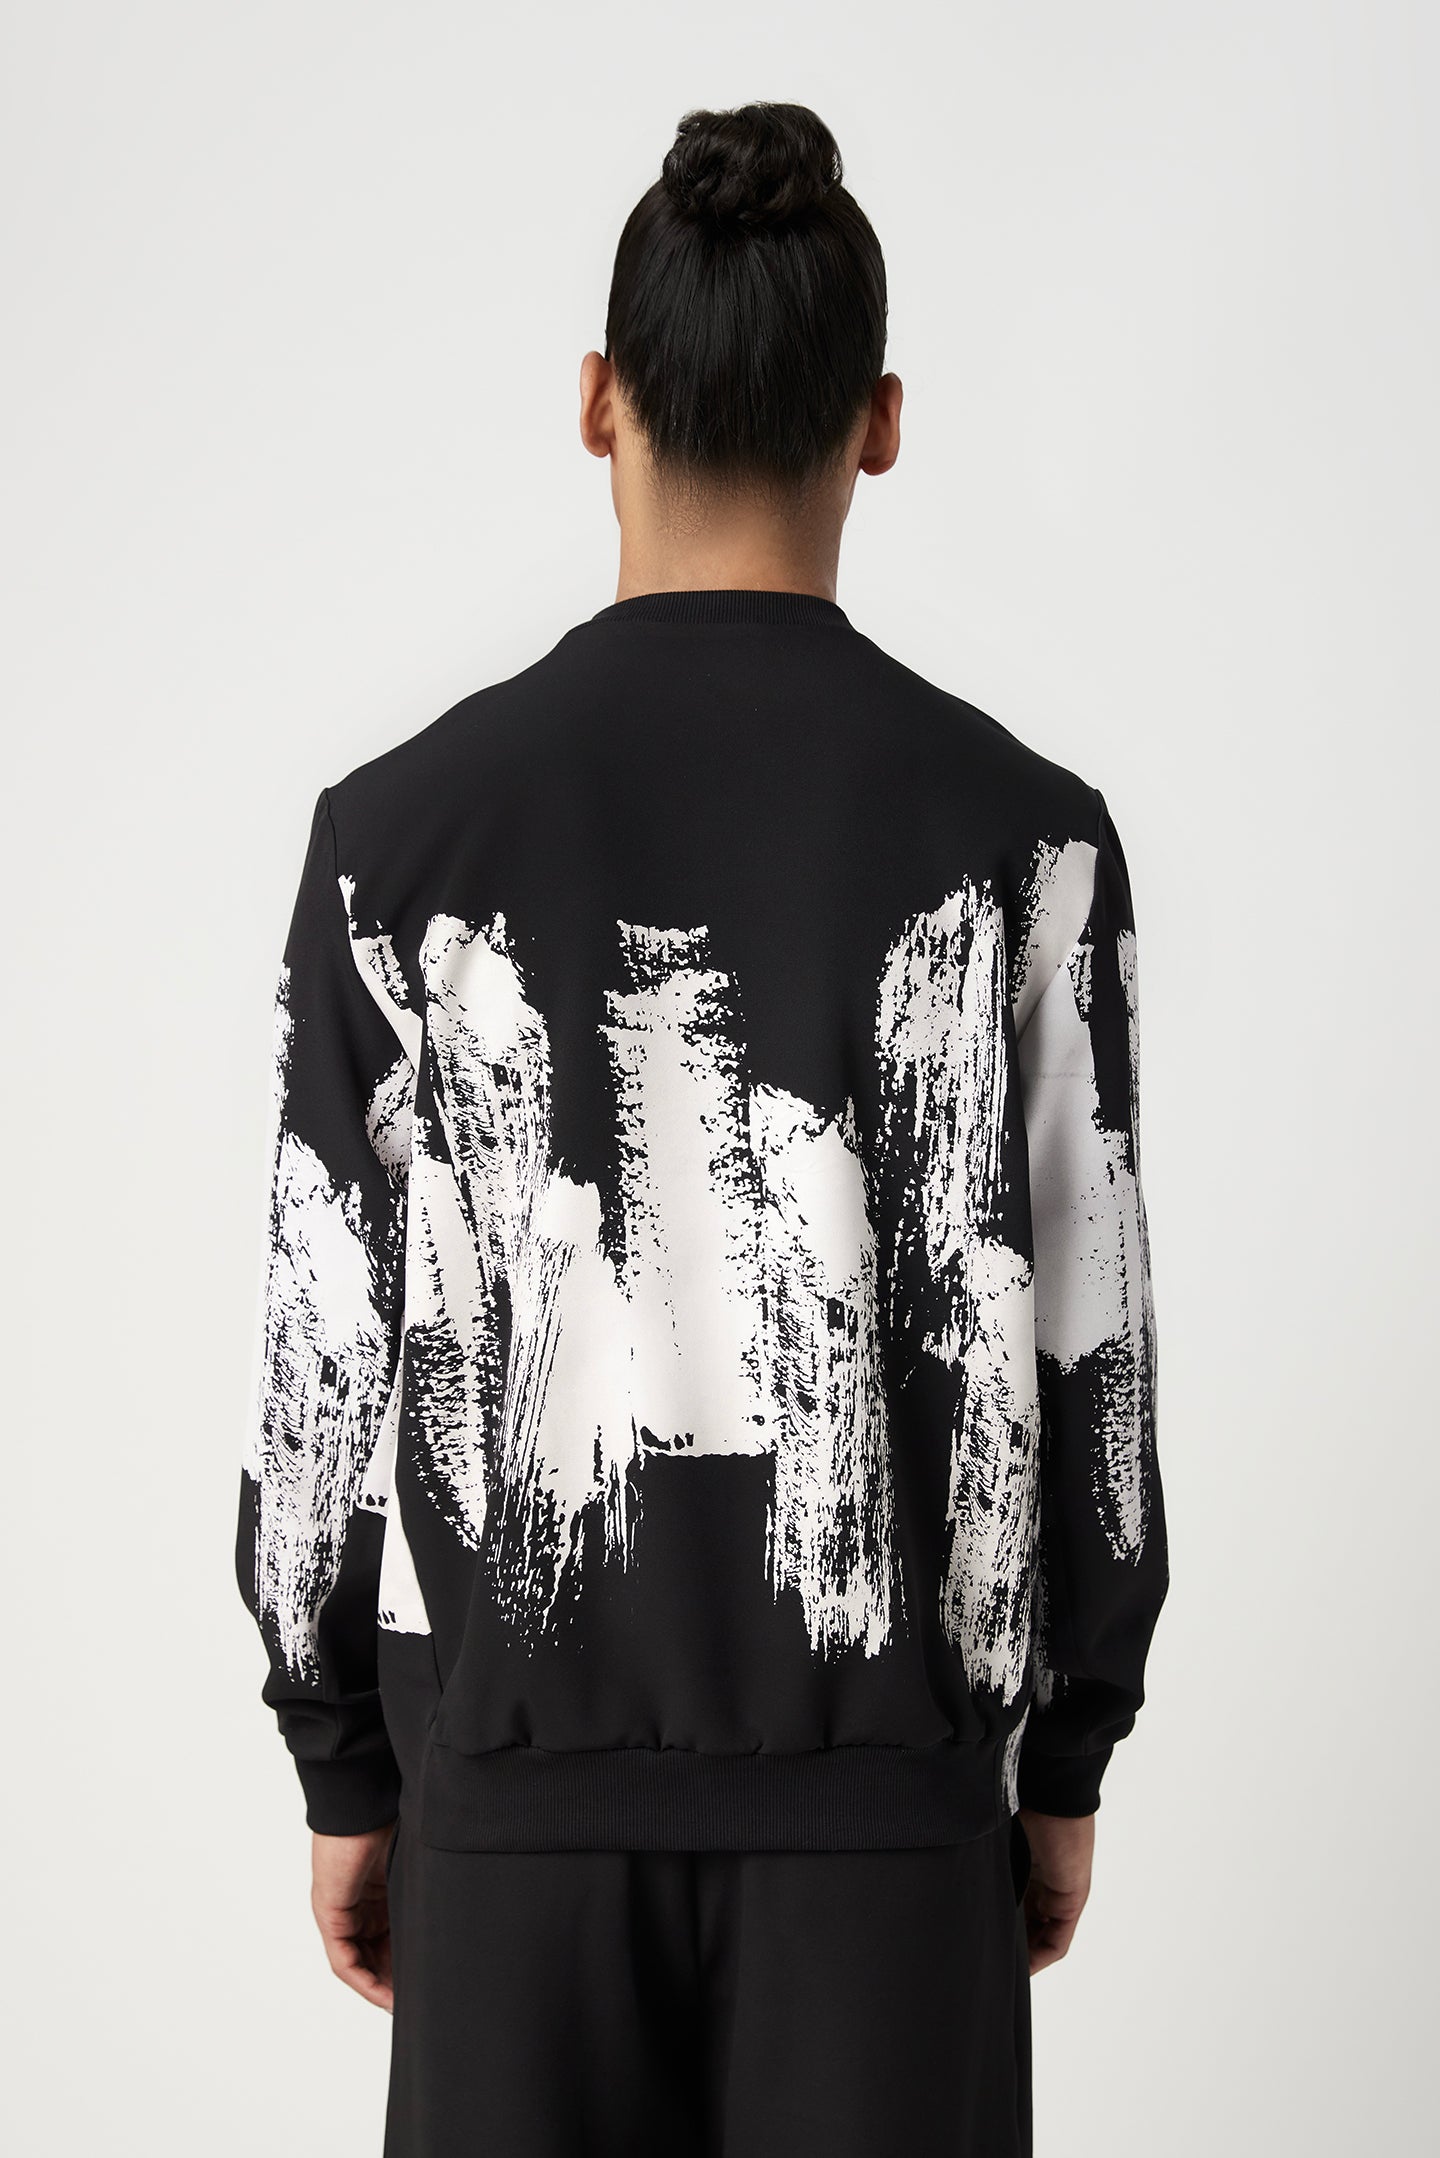 Regular Fit Sweatshirt with Artistic Brush Effect Print